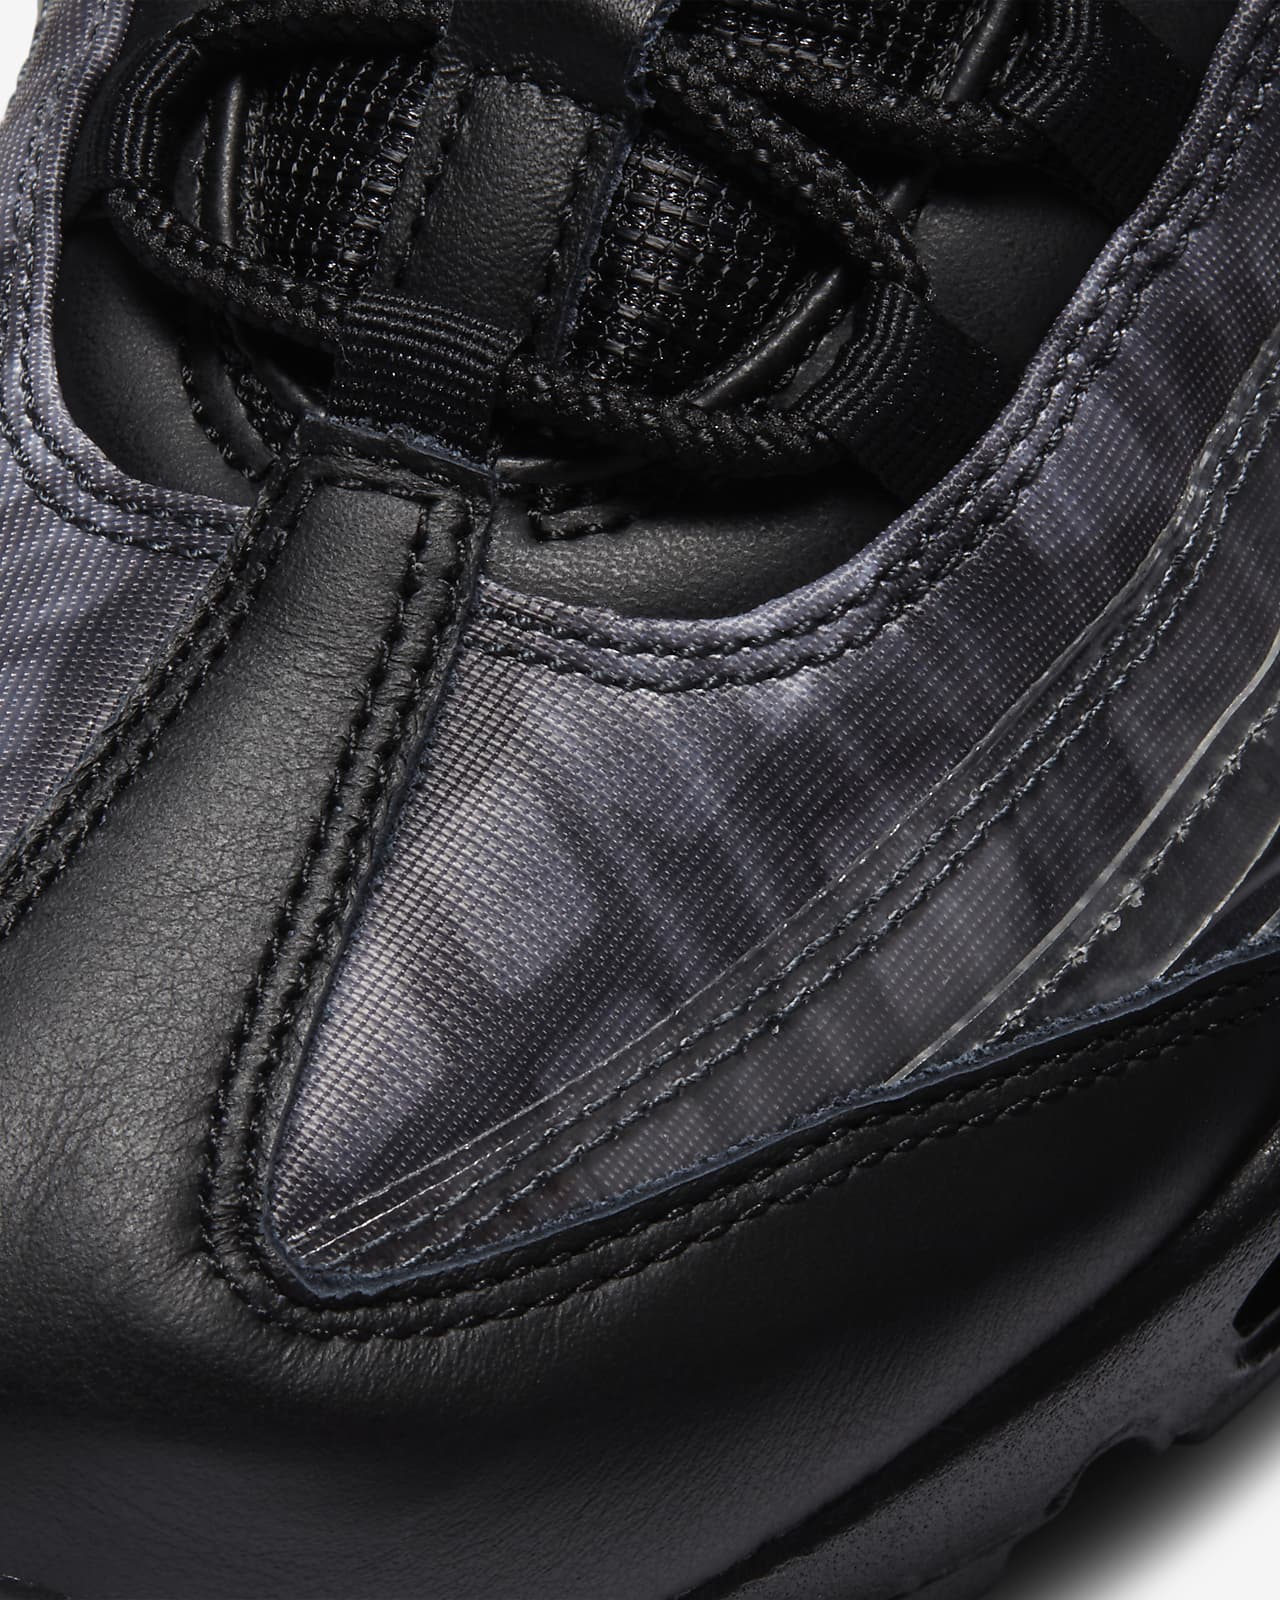 air max 95 black leather